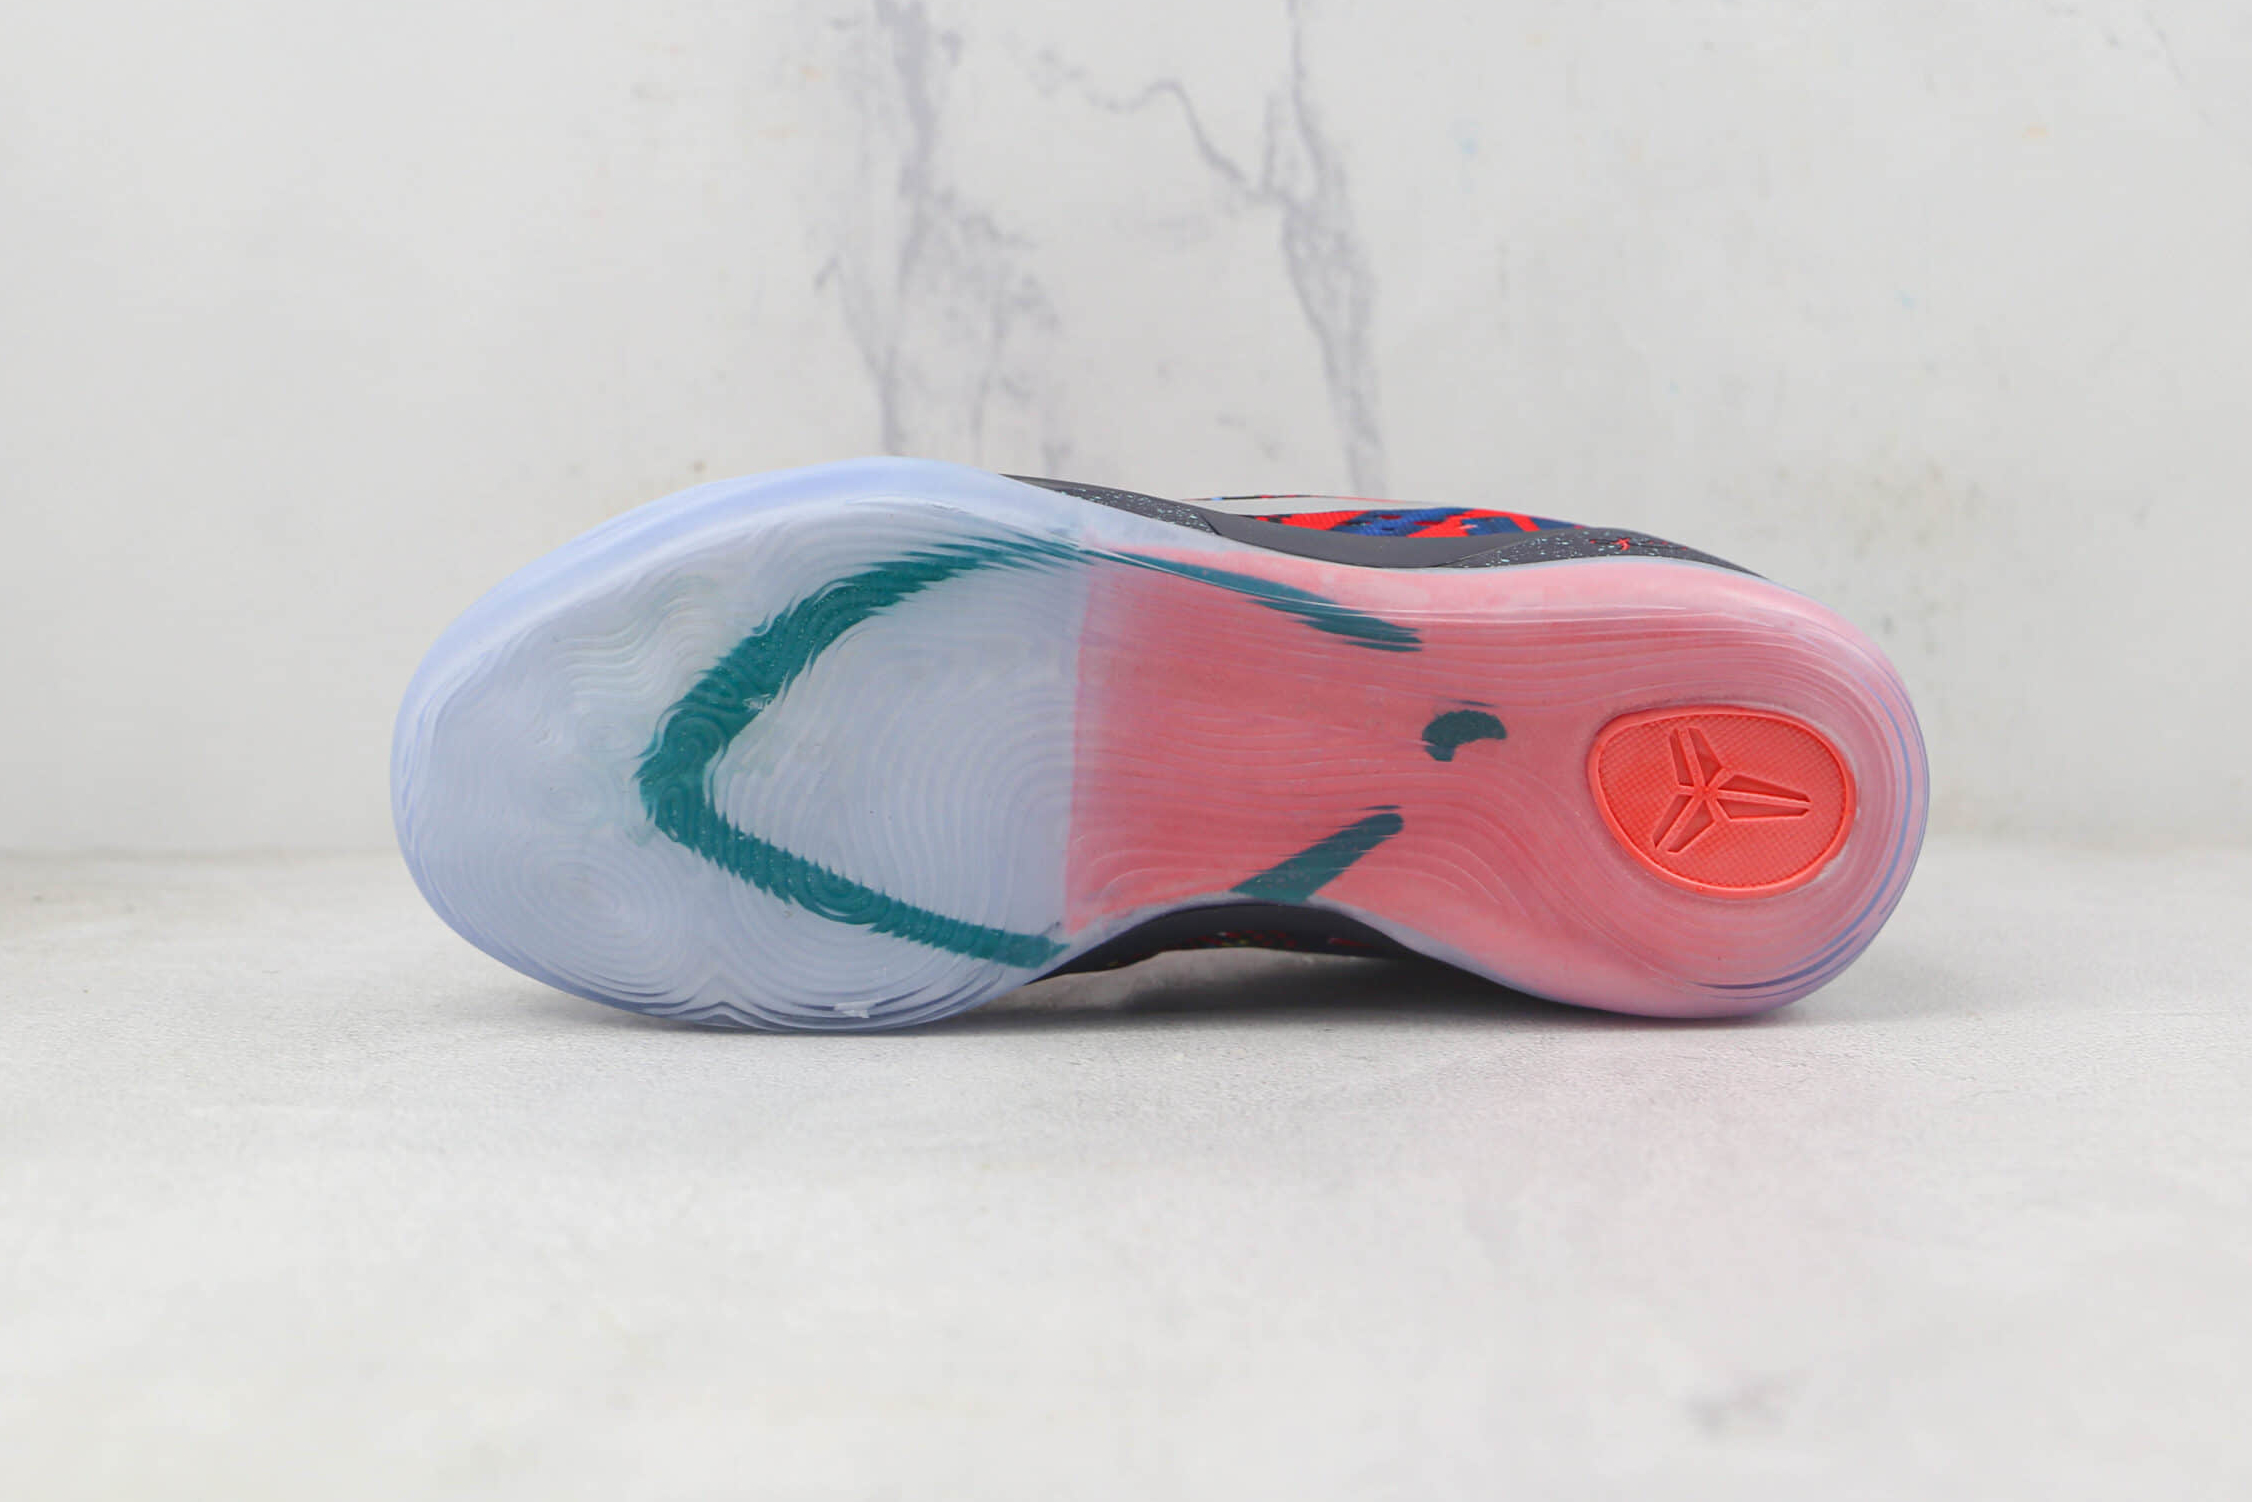 Nike Kobe 9 EM Premium 'Philippines' 669630-604 - Shop Now for Premium Kobe Shoes!